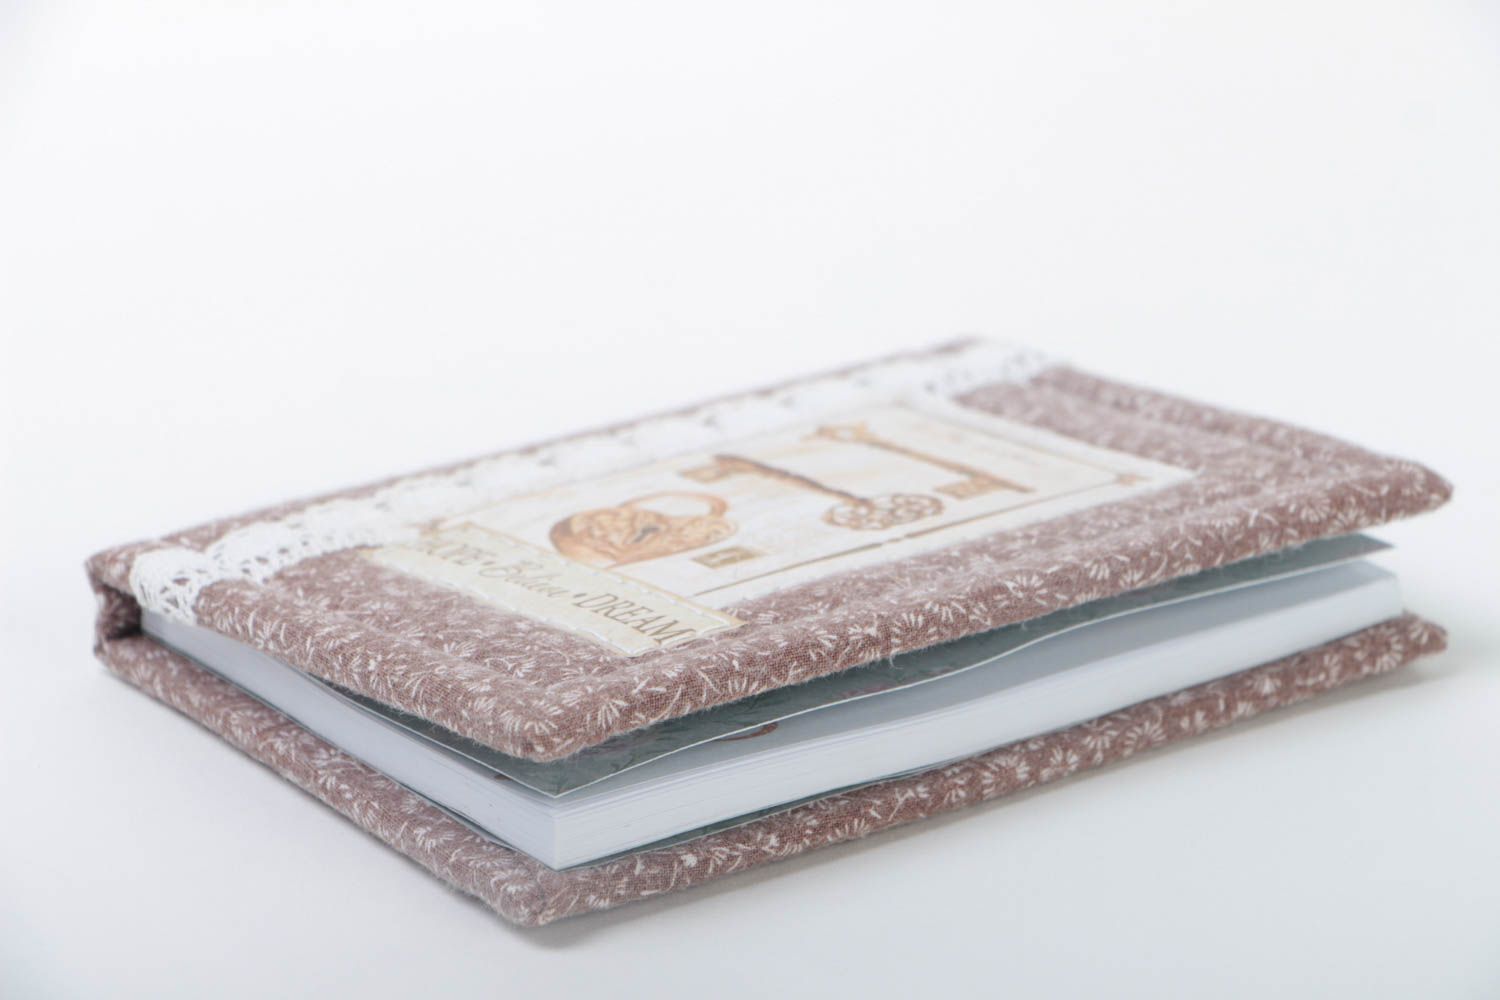 Unusual handmade scrapbooking notebook homemade stationery designs gift ideas photo 3